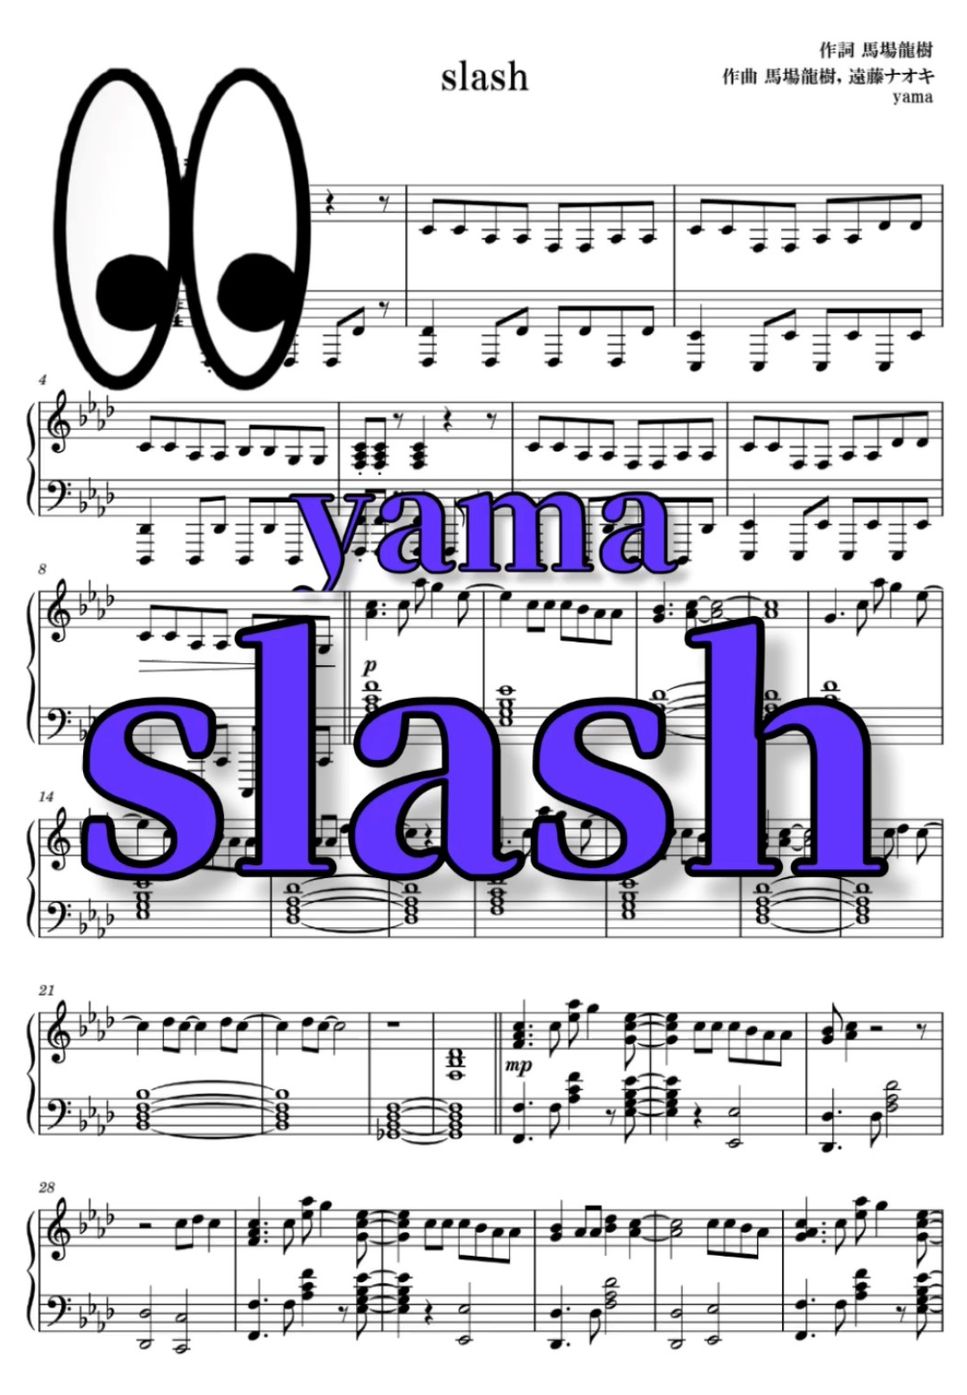 yama - 【超上級】slash (水星の魔女) by uRuMI